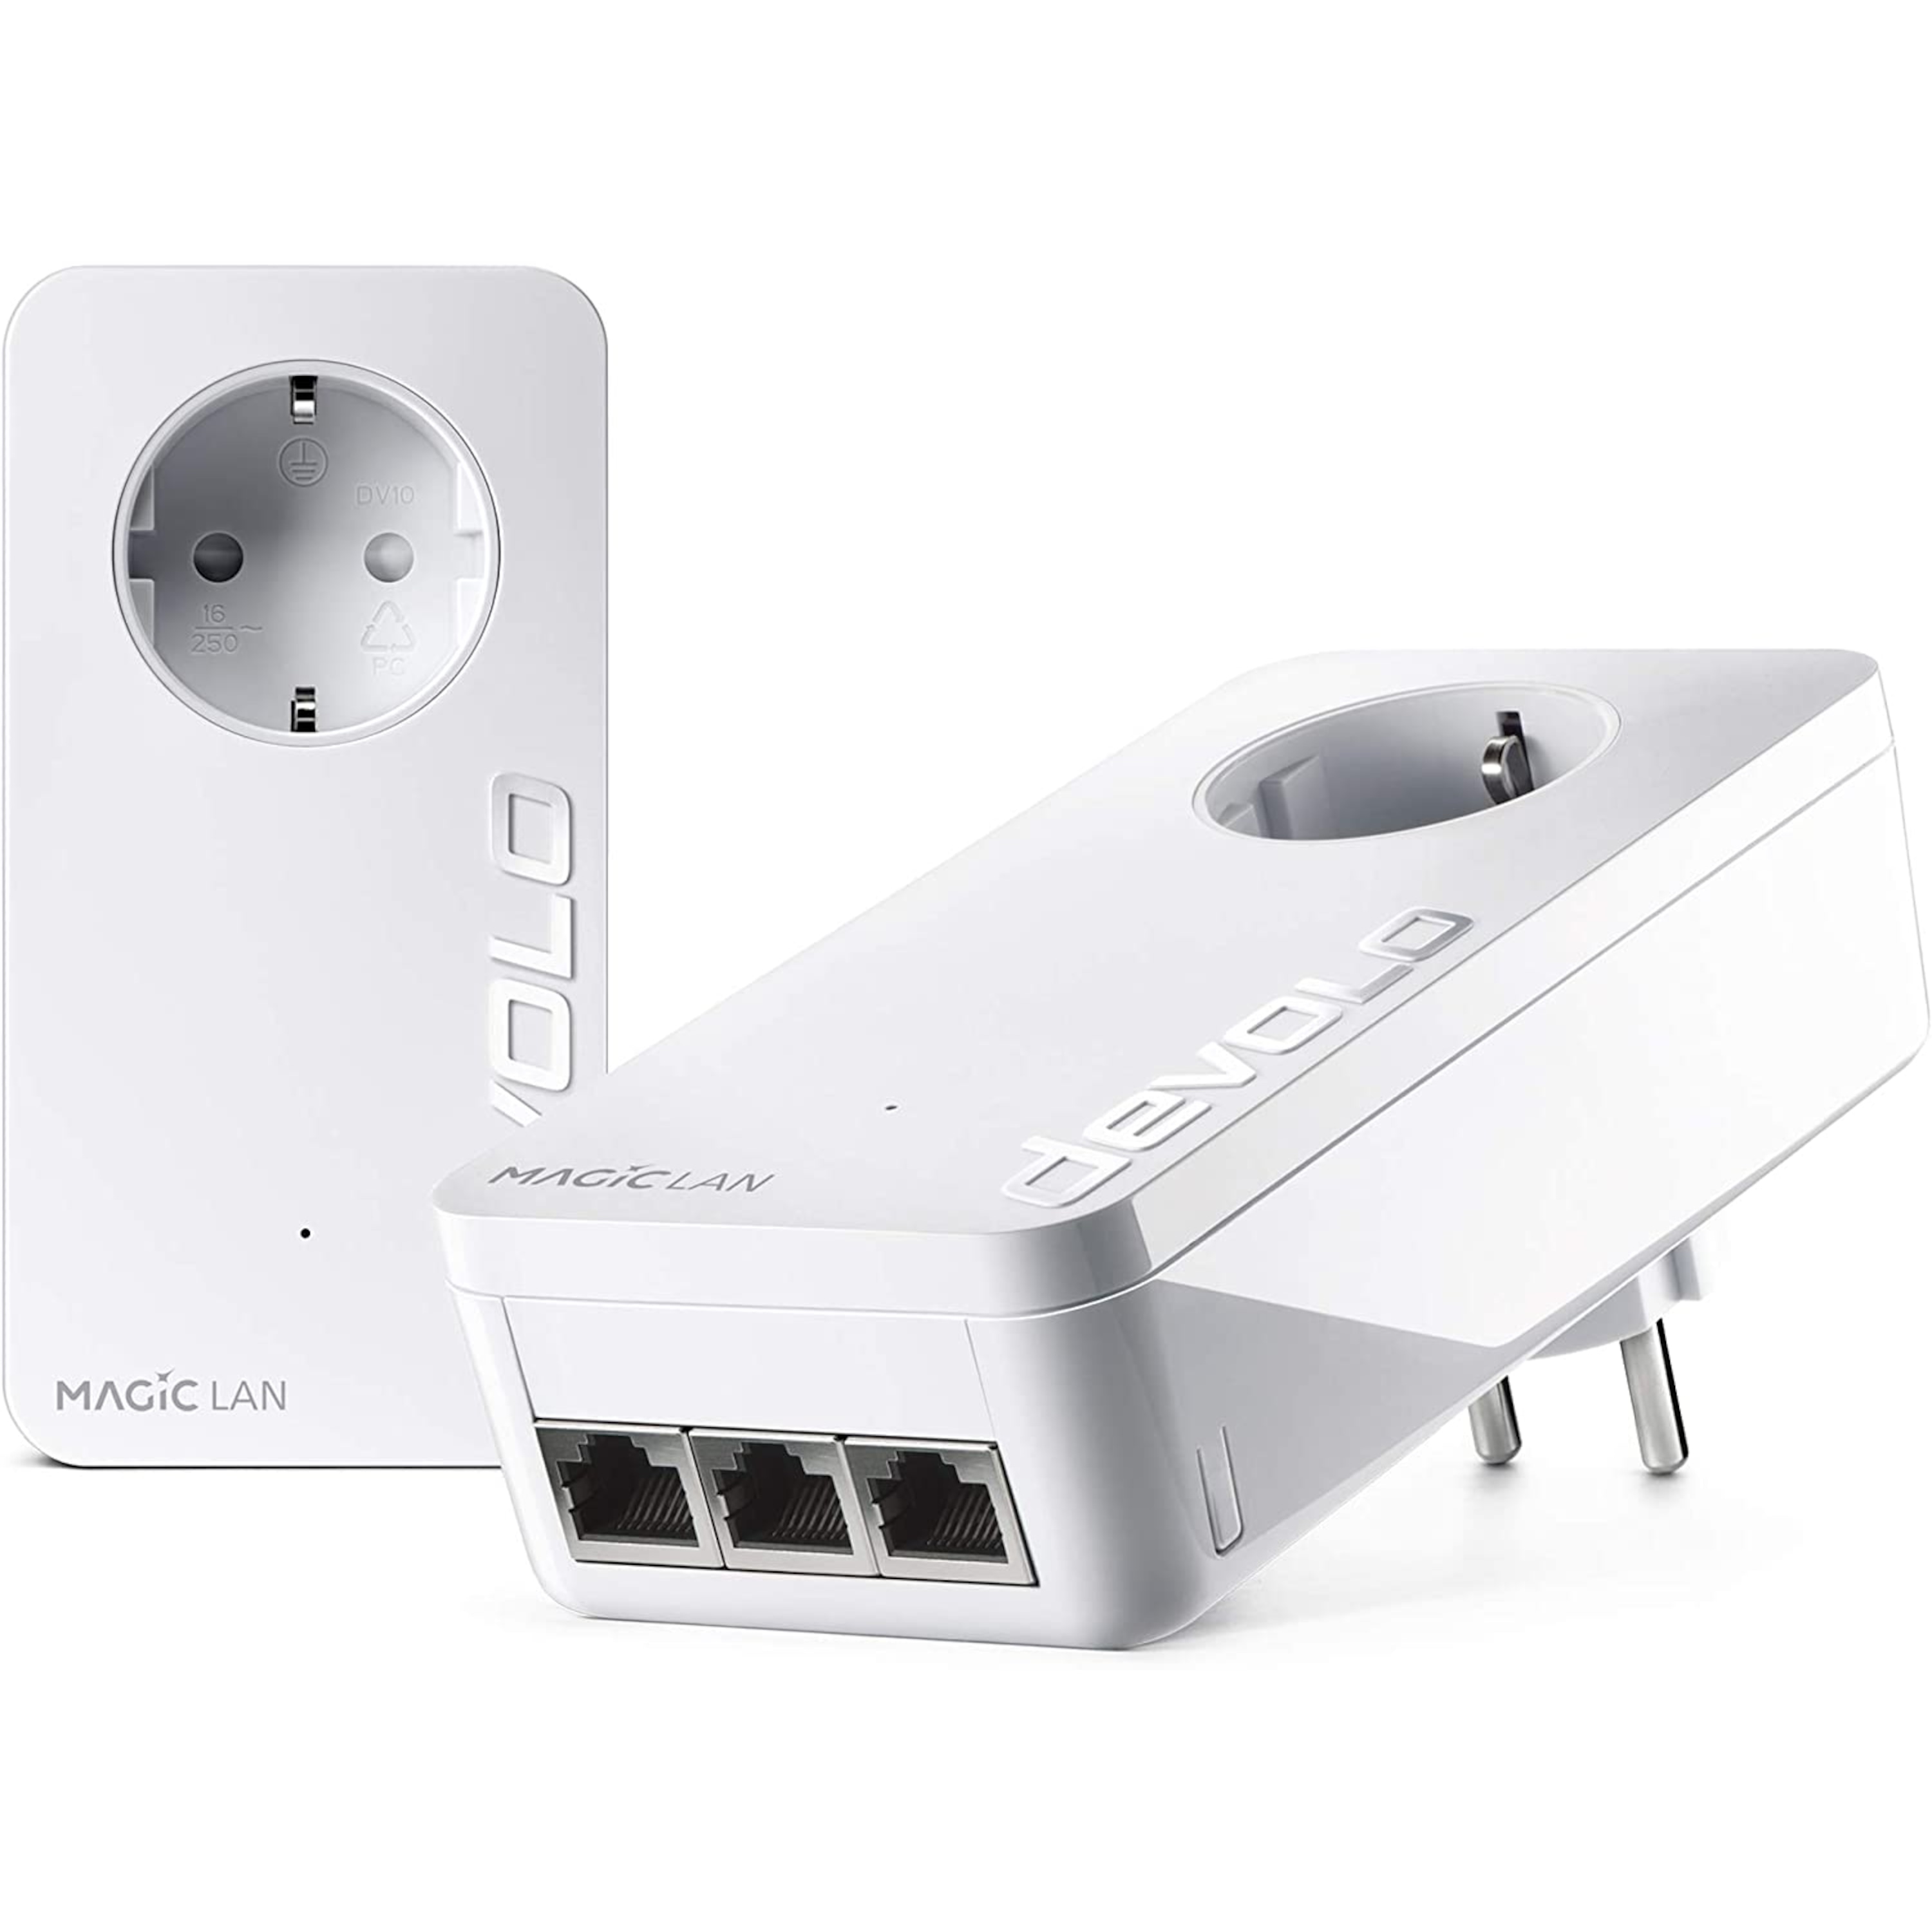 DEVOLO Magic 2 LAN Starter Kit MD 88441, 2400 Mbit/s, 3 Gigabit LAN-Ports, bis zu 500 Metern, Steckdose mit Kindersicherung